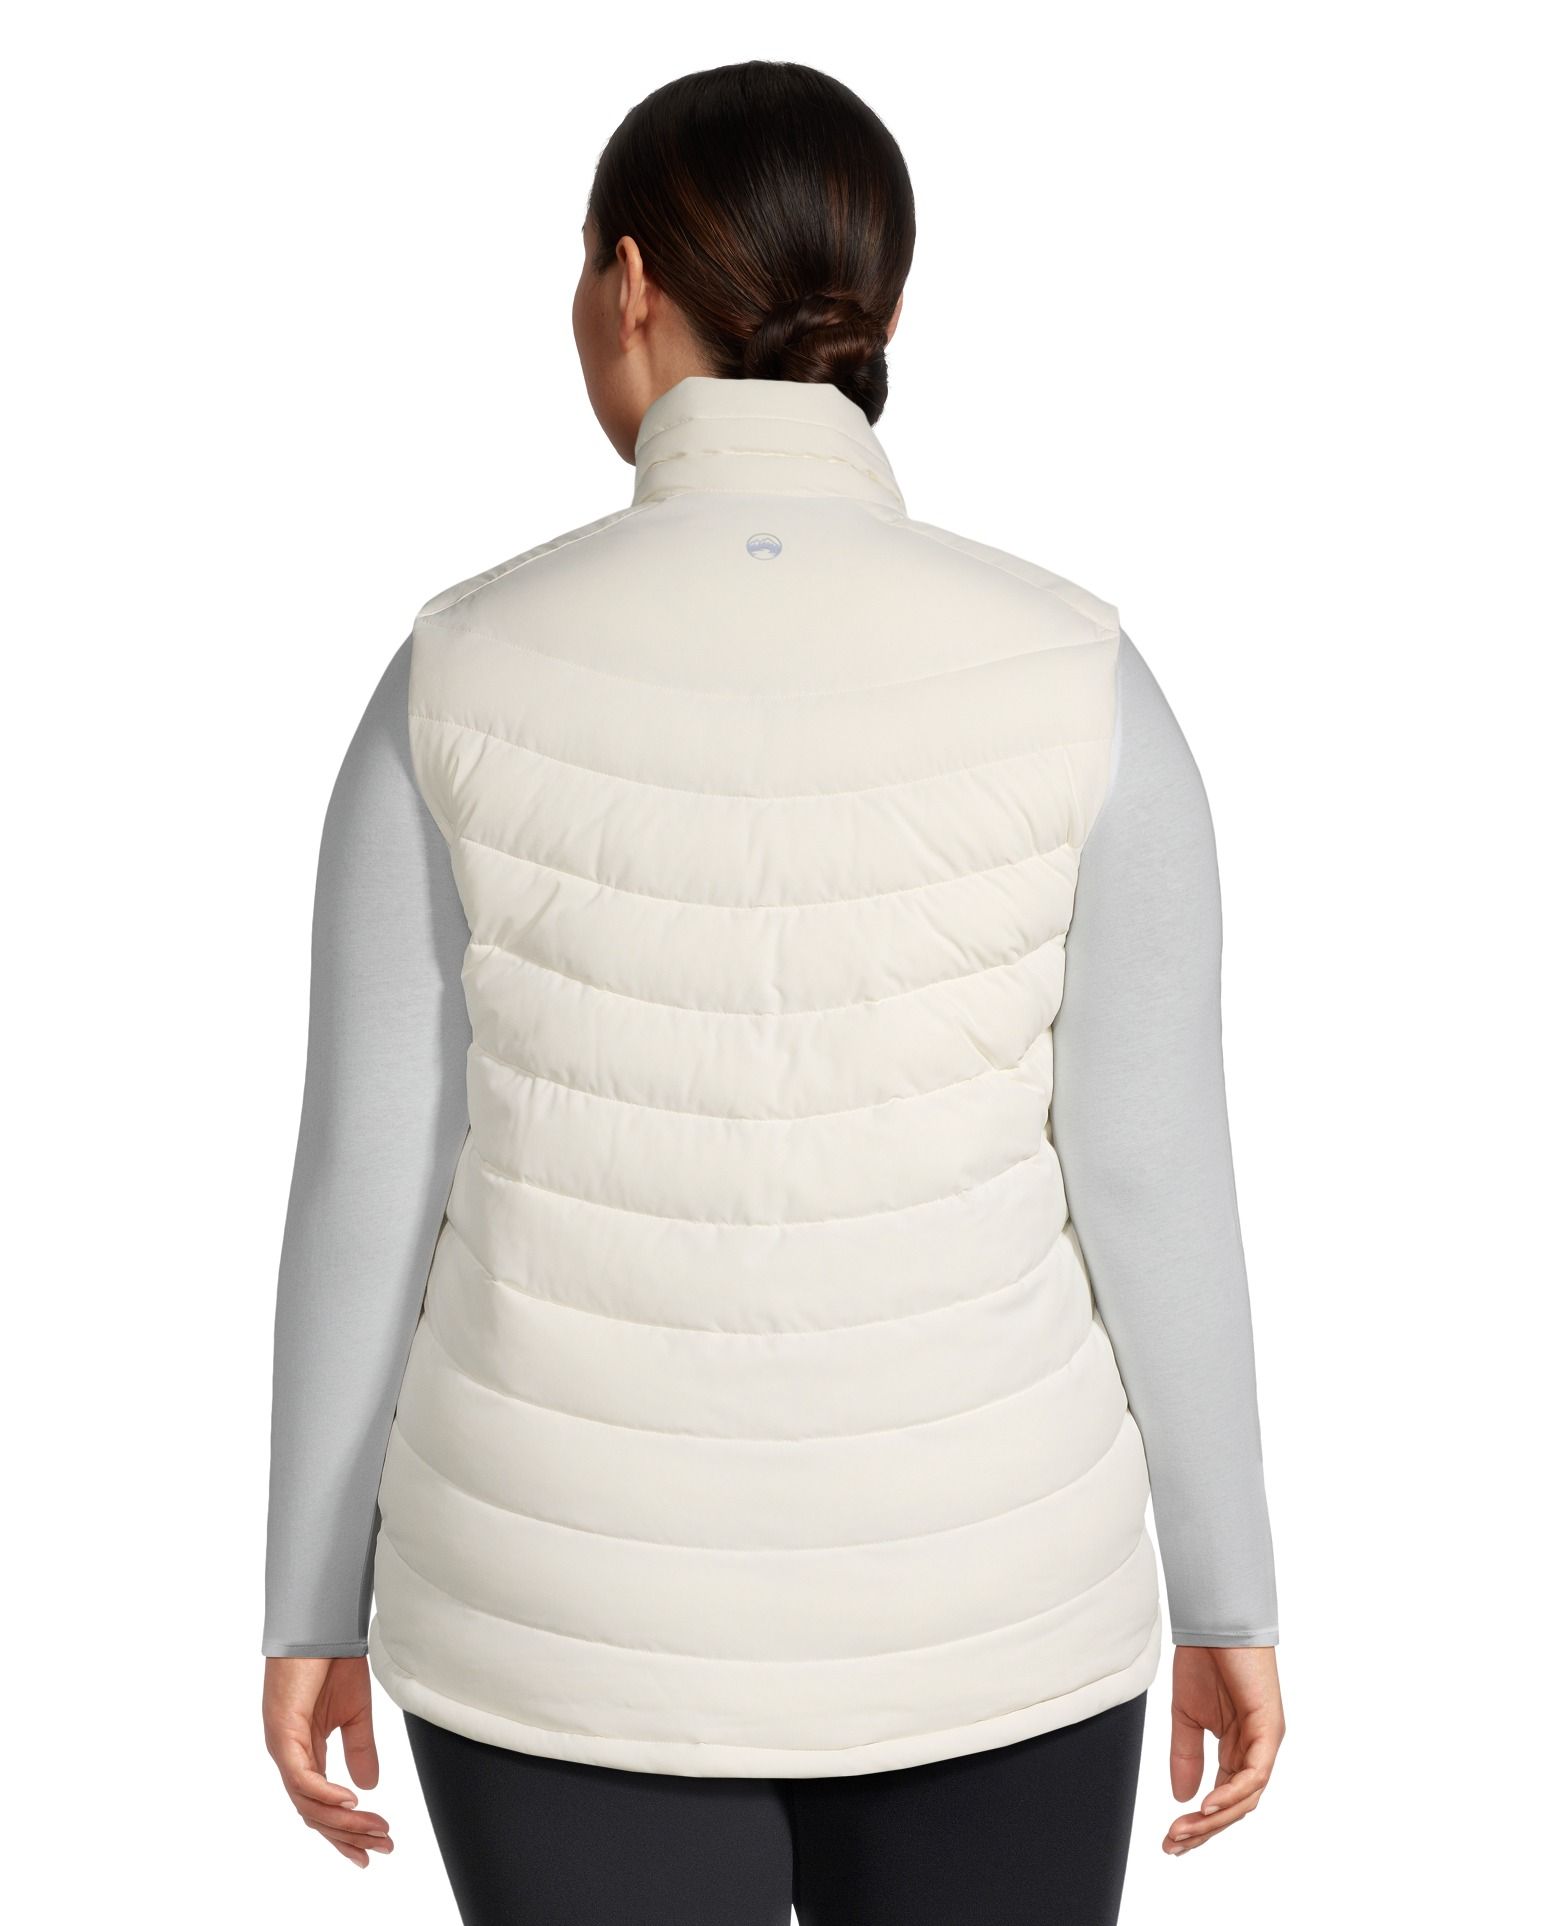 WindRiver Women's Hyper-Dri HD1 Water Repellent T-Max Puffer Vest